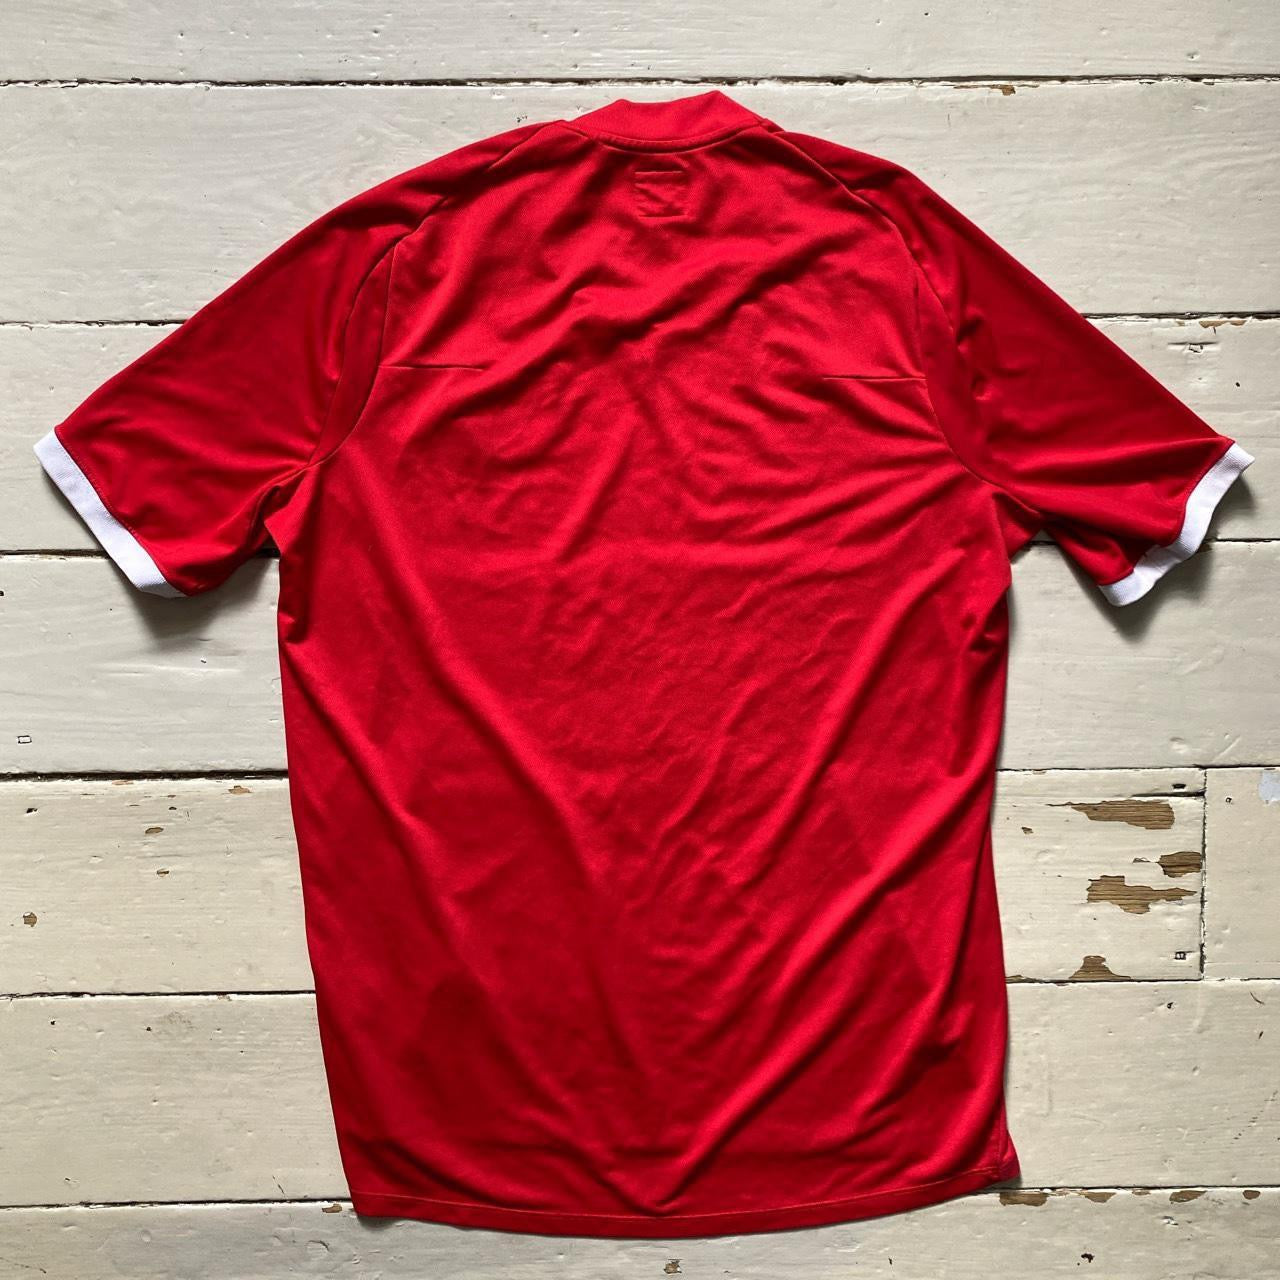 England Umbro Red Jersey (XL)